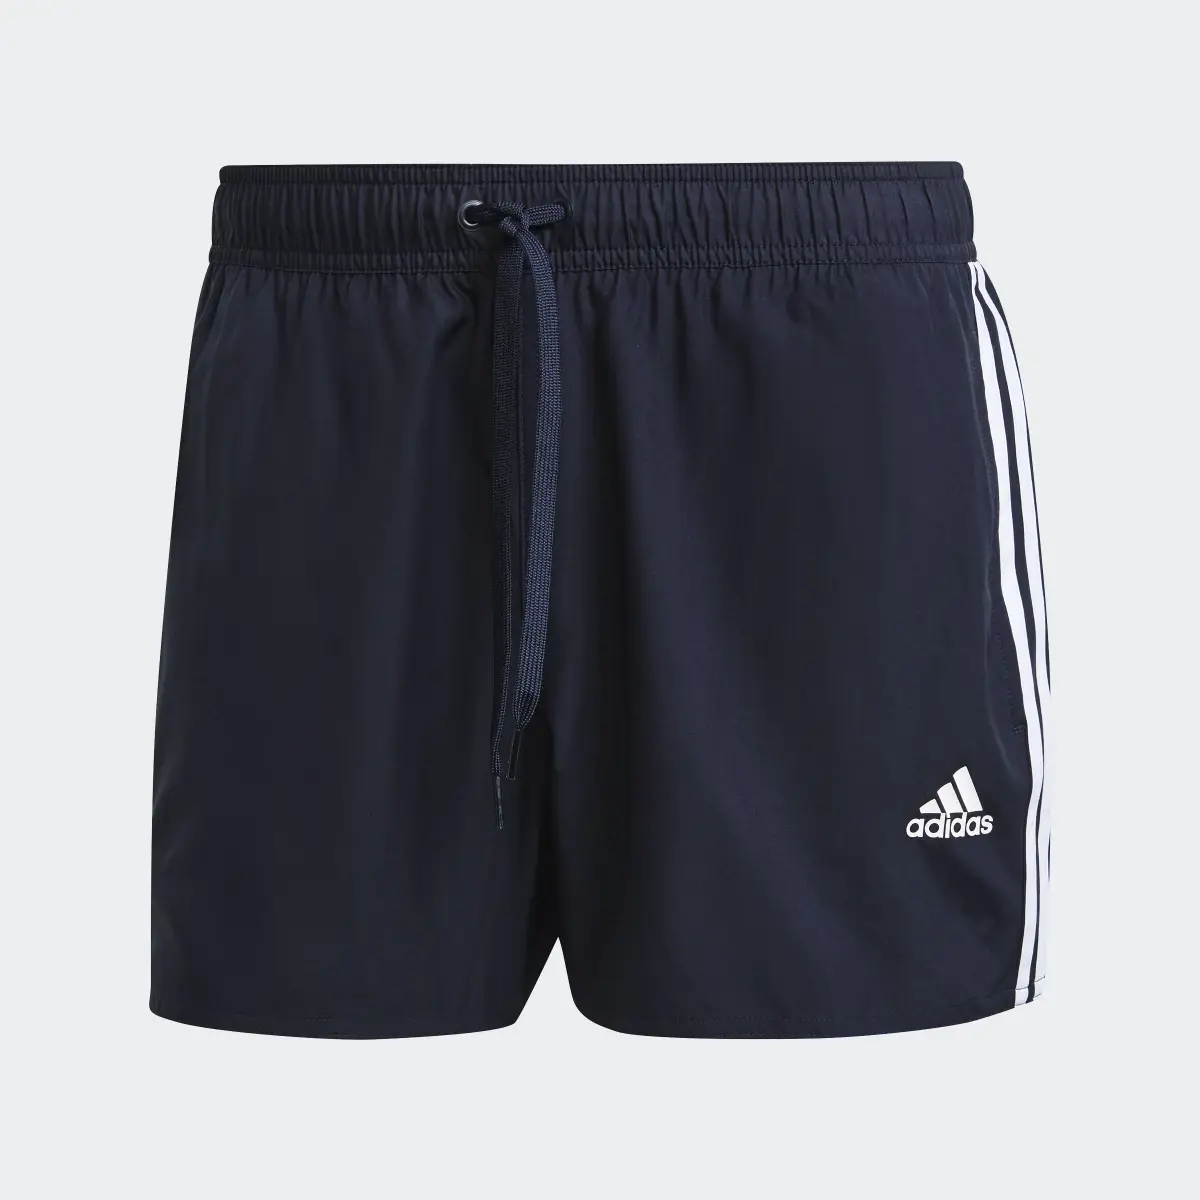 Adidas Classic 3-Stripes Swim Shorts. 1